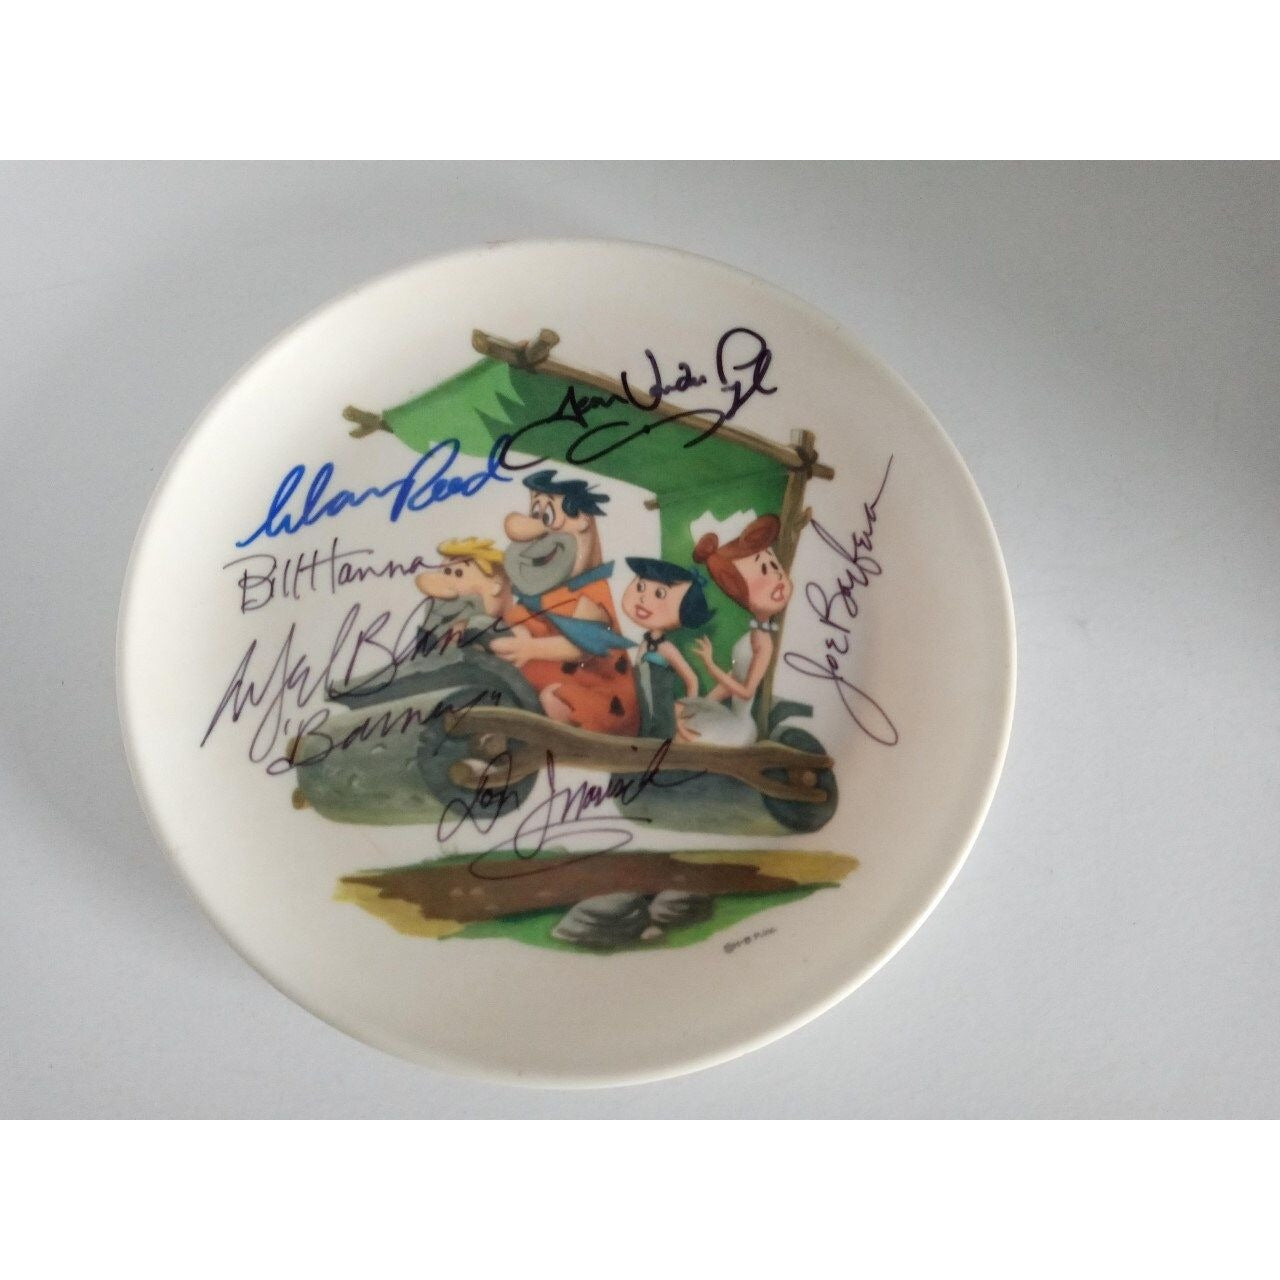 Bill Hanna and Joe Barbera signed Flintstones